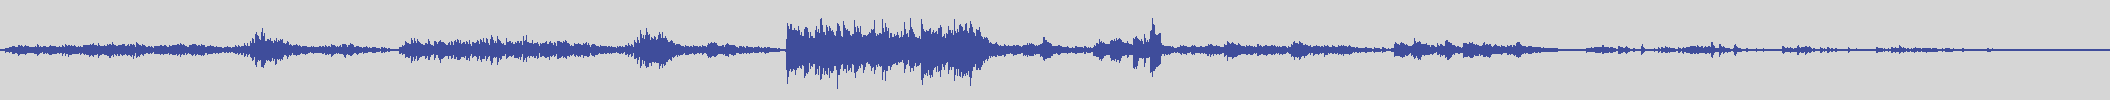 big_music_classic [BMC011] Marco Noia - Guadosalam [] audio wave form